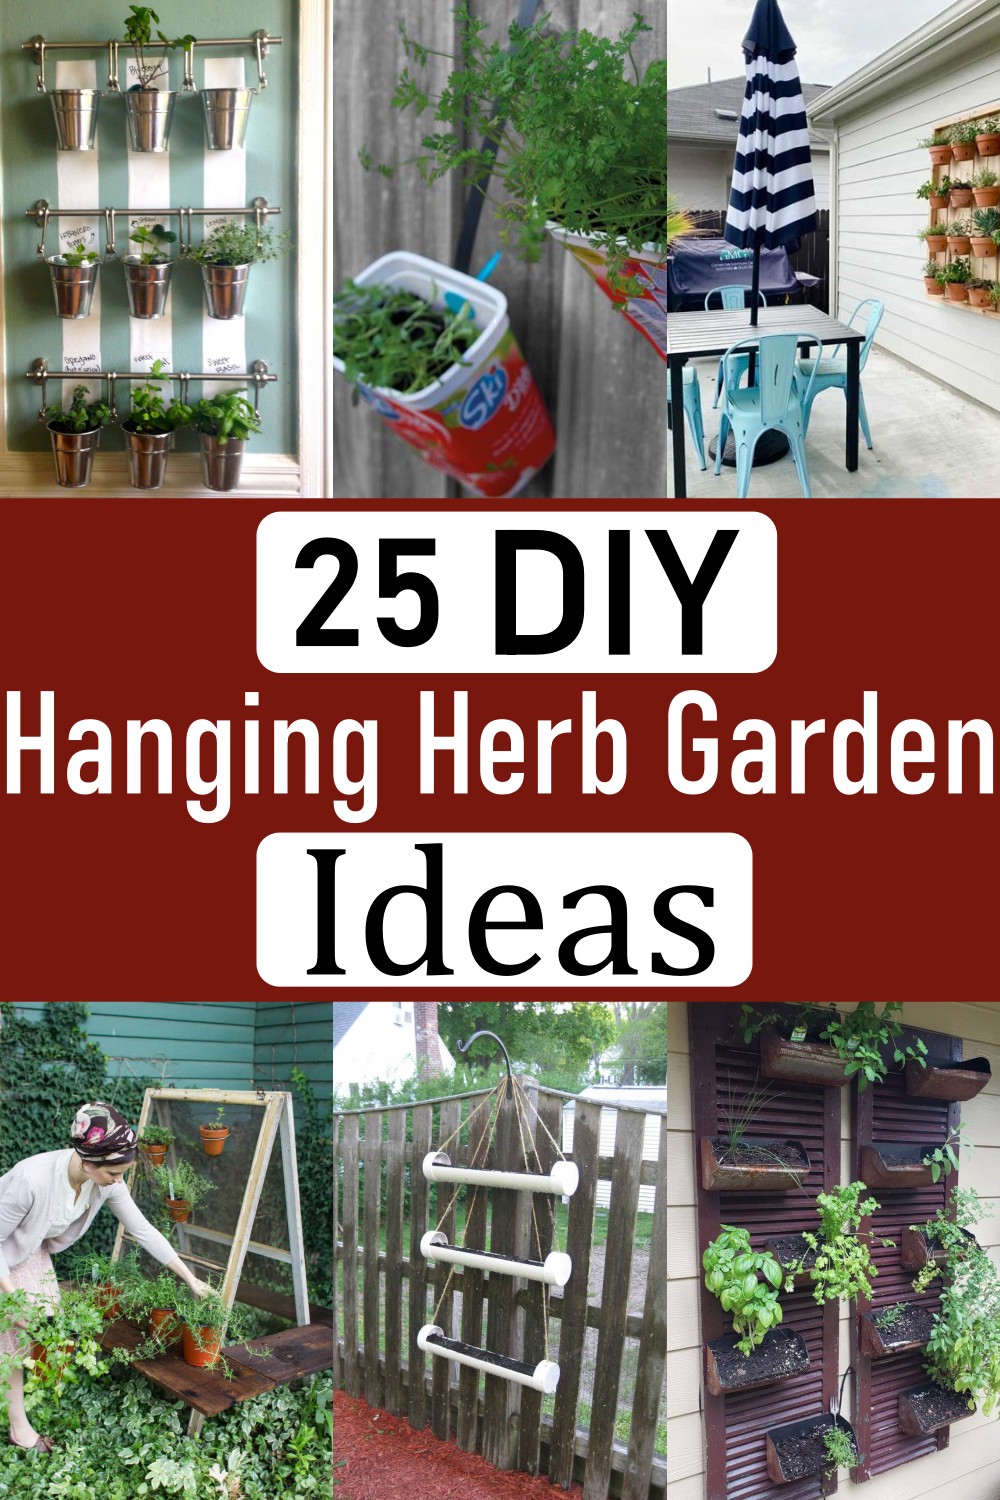  Hanging Herb Garden